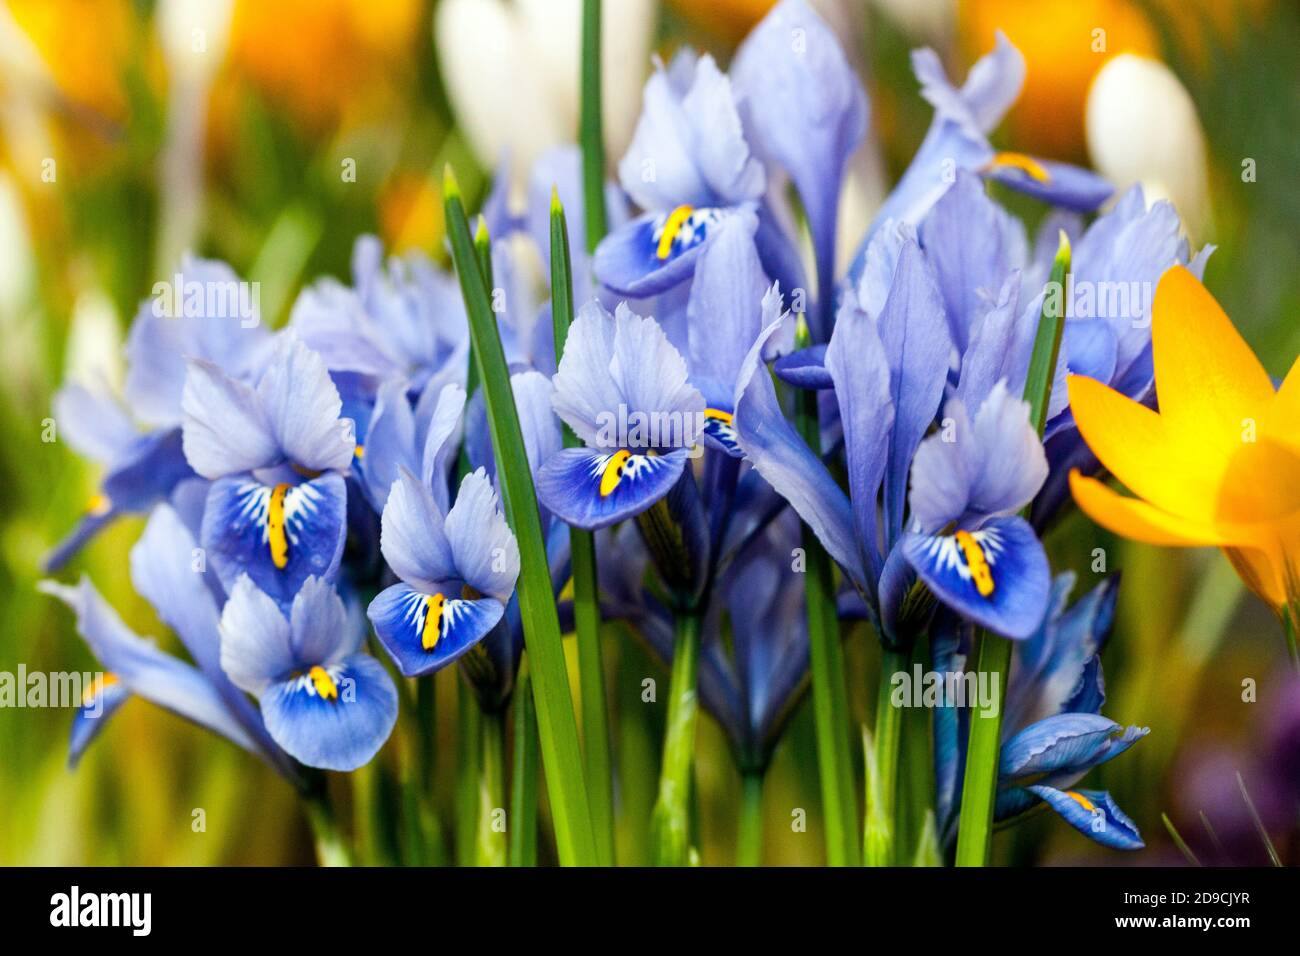 Blaue Irisblume Crocus Frühling Gartenblumen im März erste Frühlingsblumen Iris Blaue Blume März Blumen Frühlingspflanzen Stauden Iris 'Harmony' Stockfoto